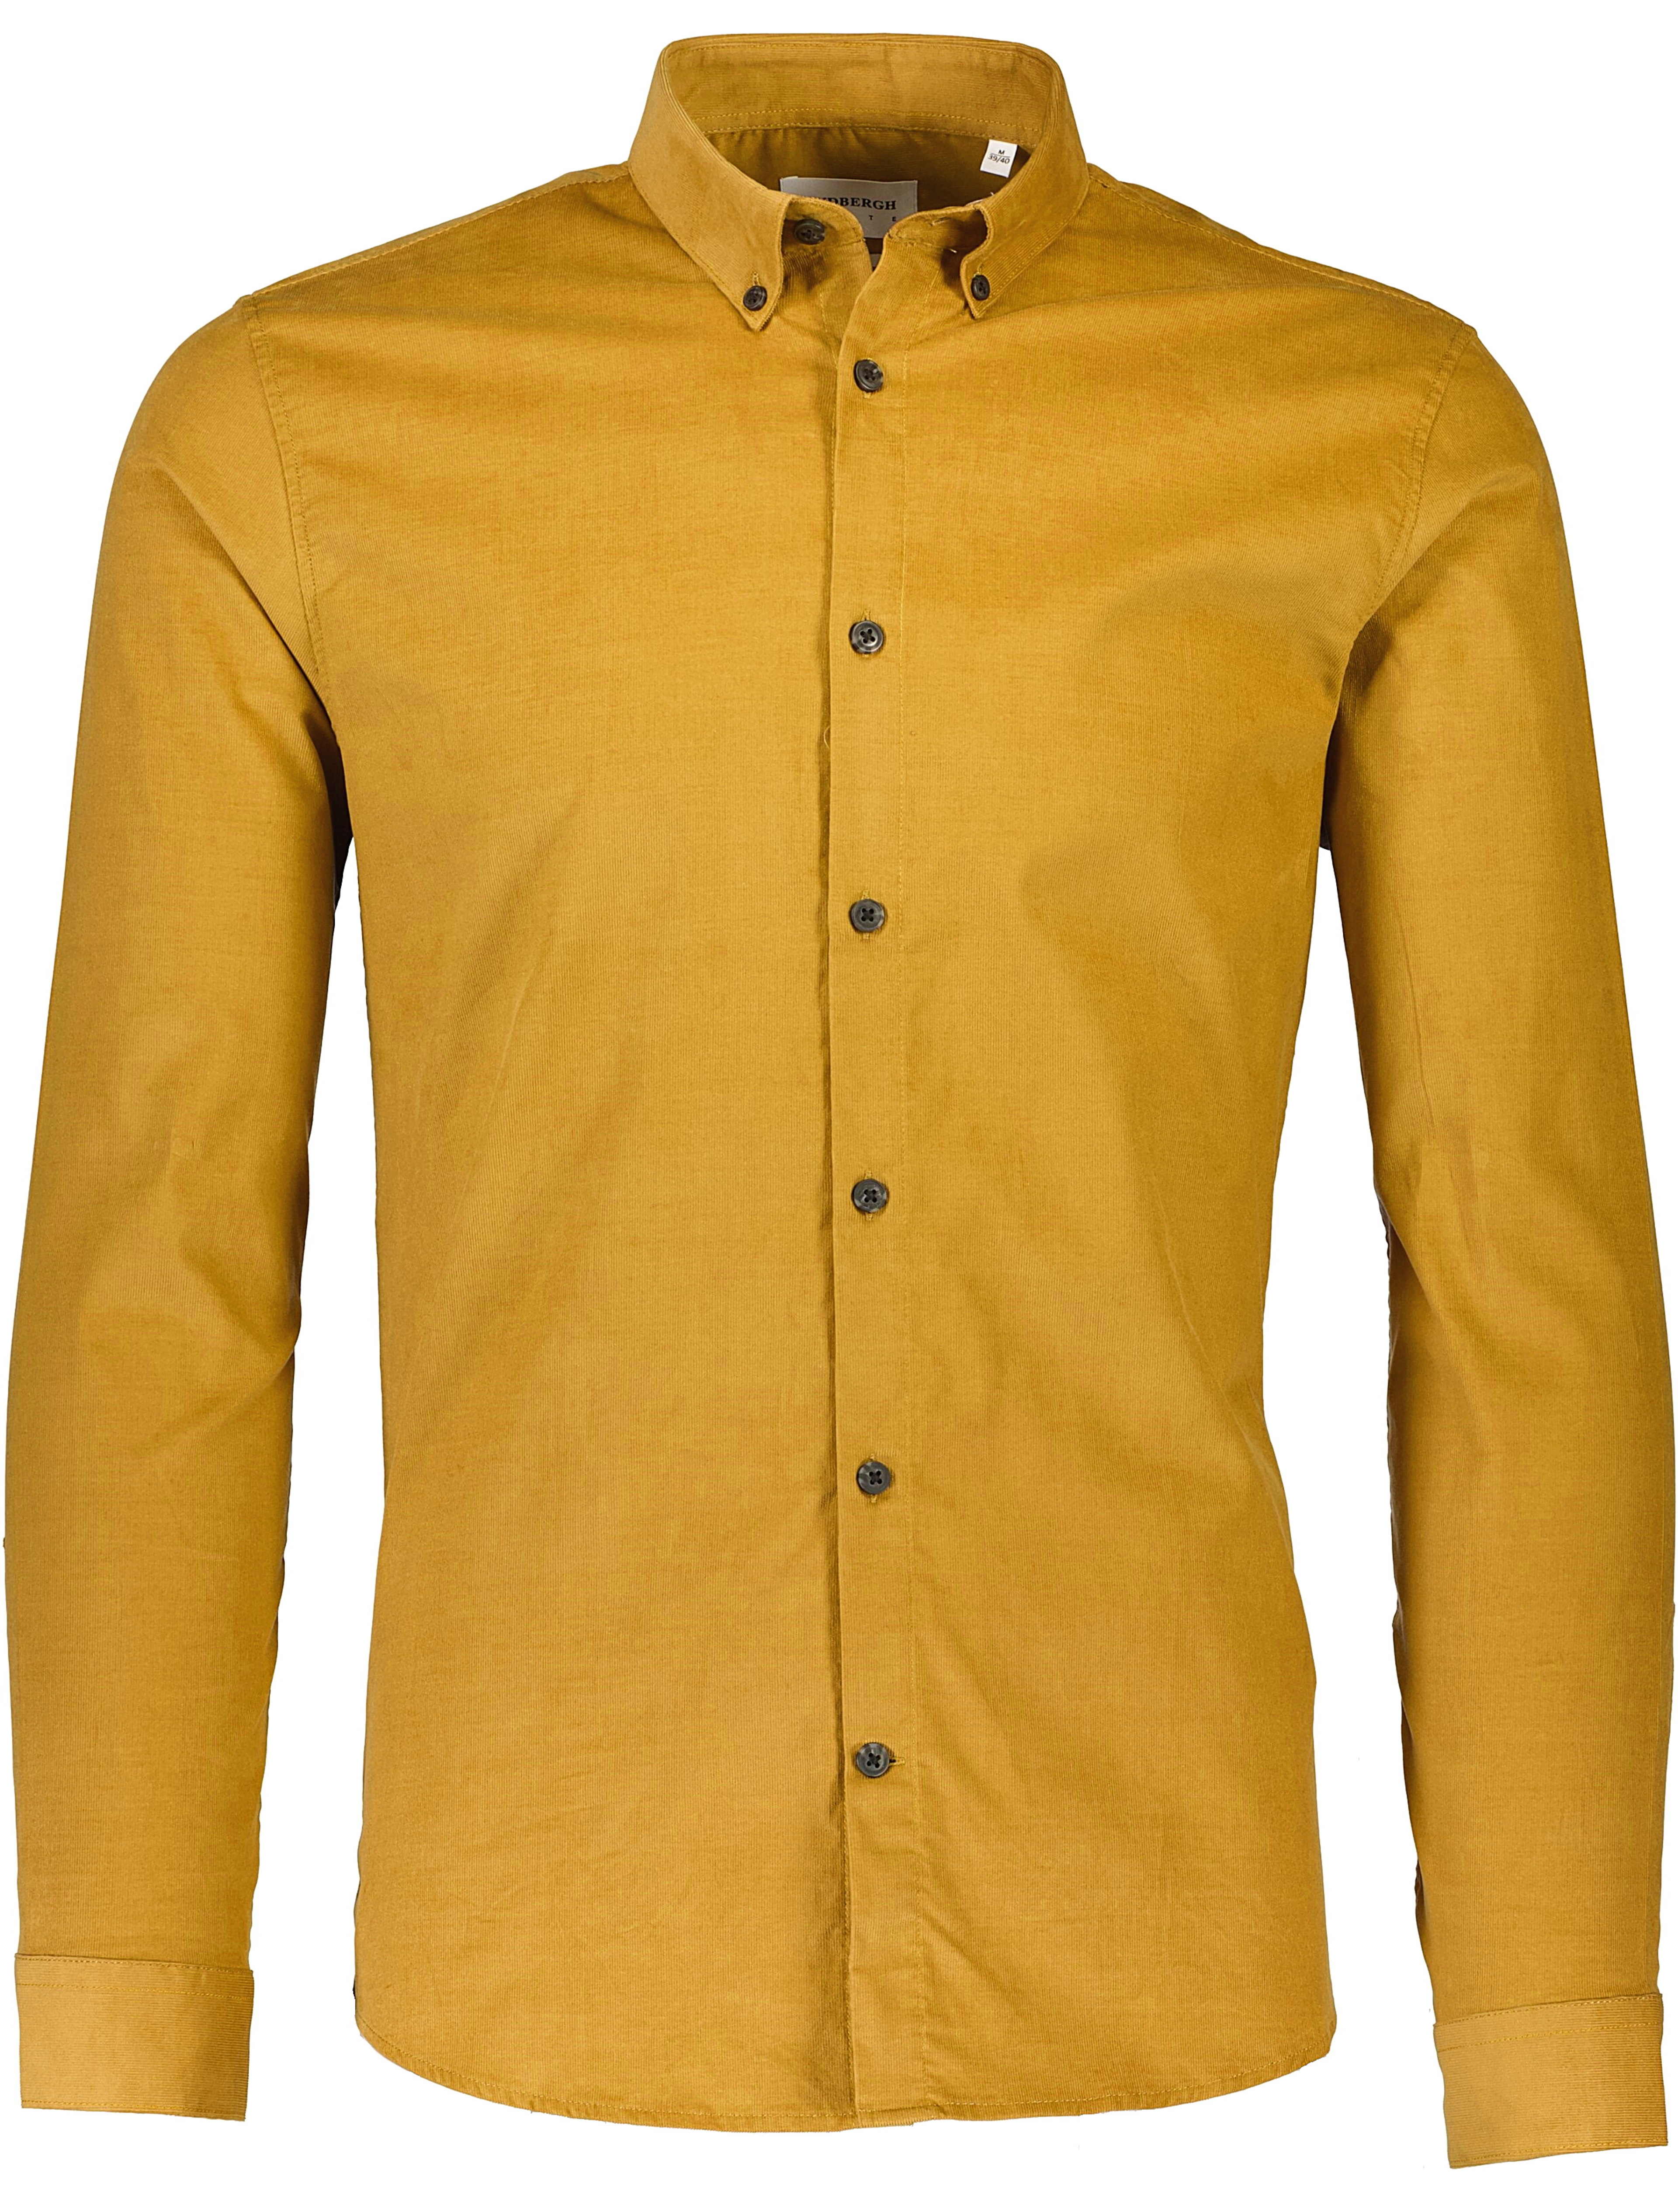 Lindbergh Business casual shirt yellow / dark camel